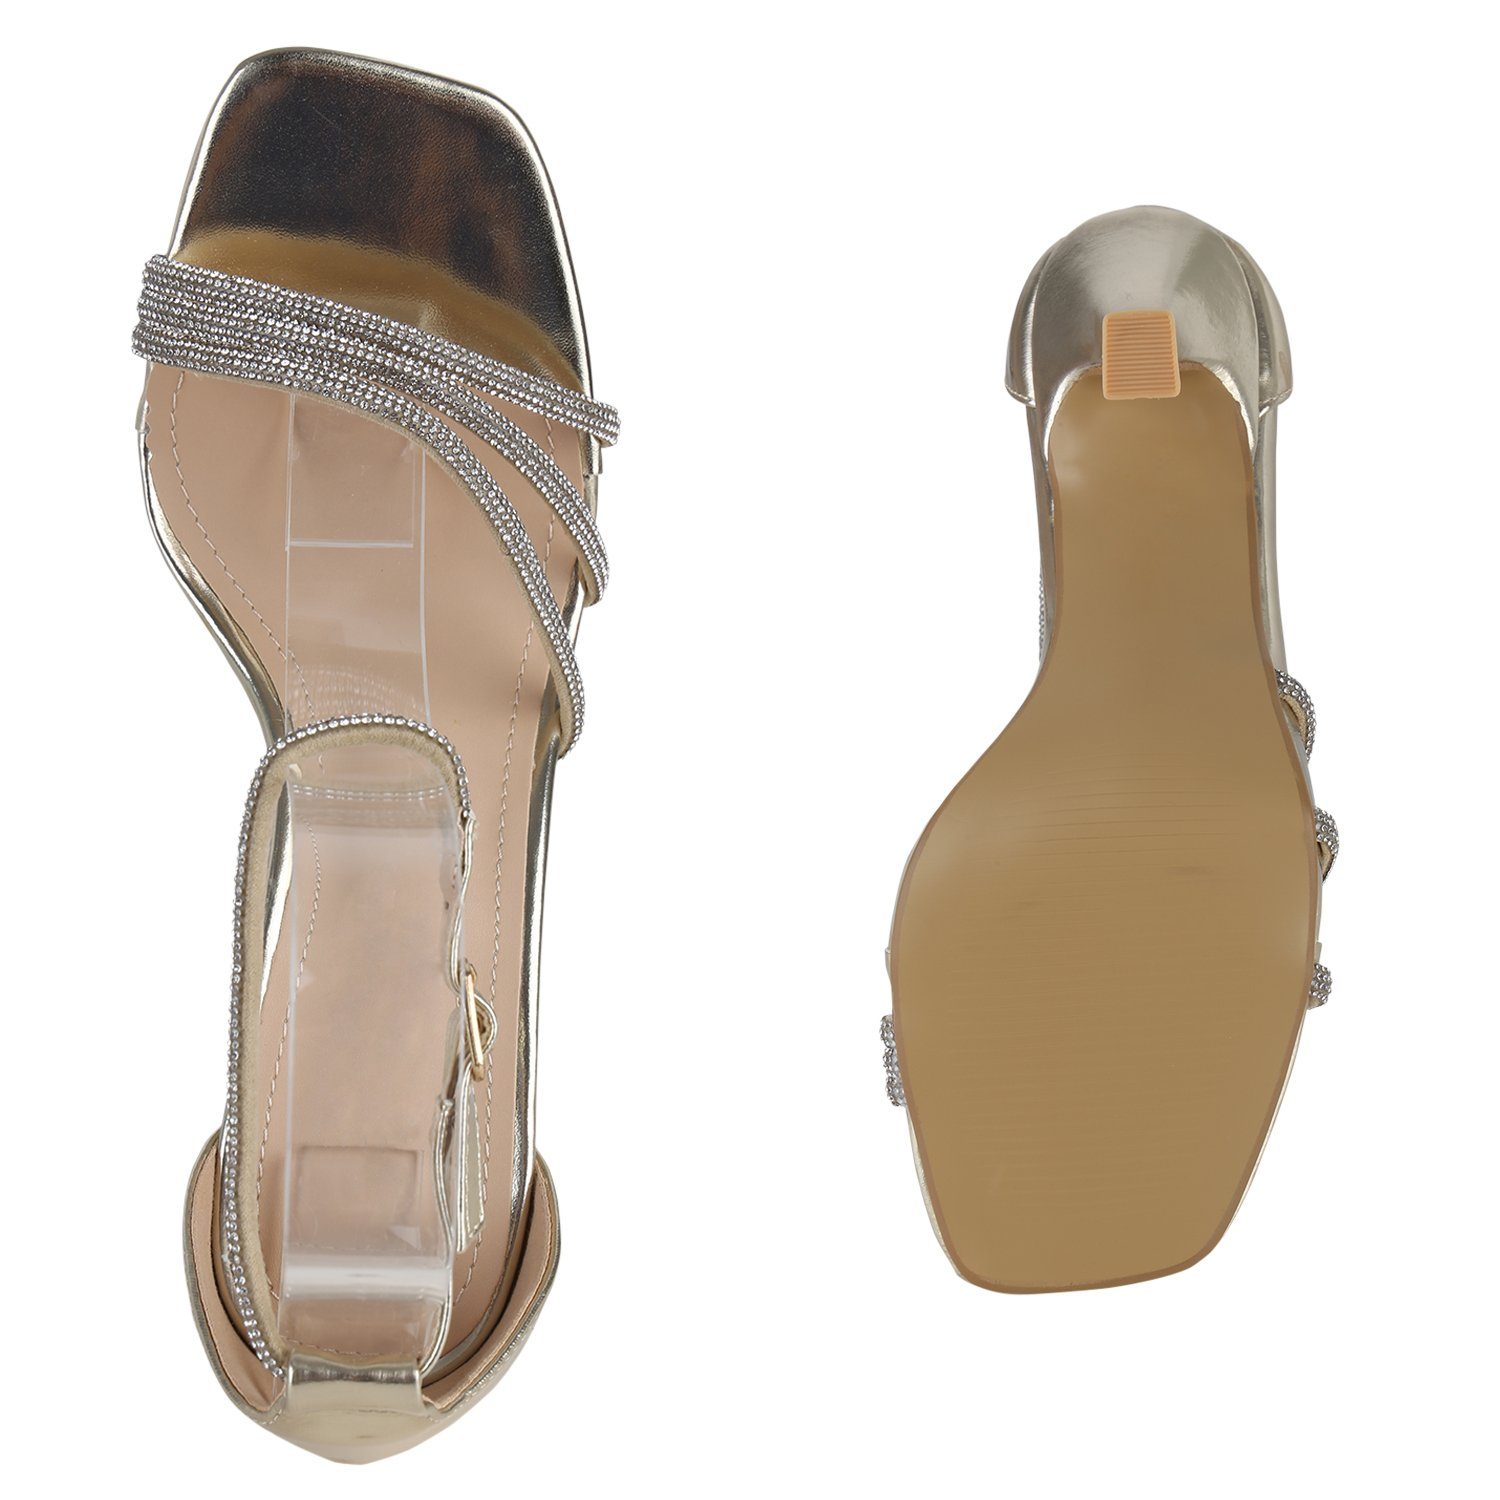 Sandalette HILL Schuhe Gold VAN 839345 Bequeme